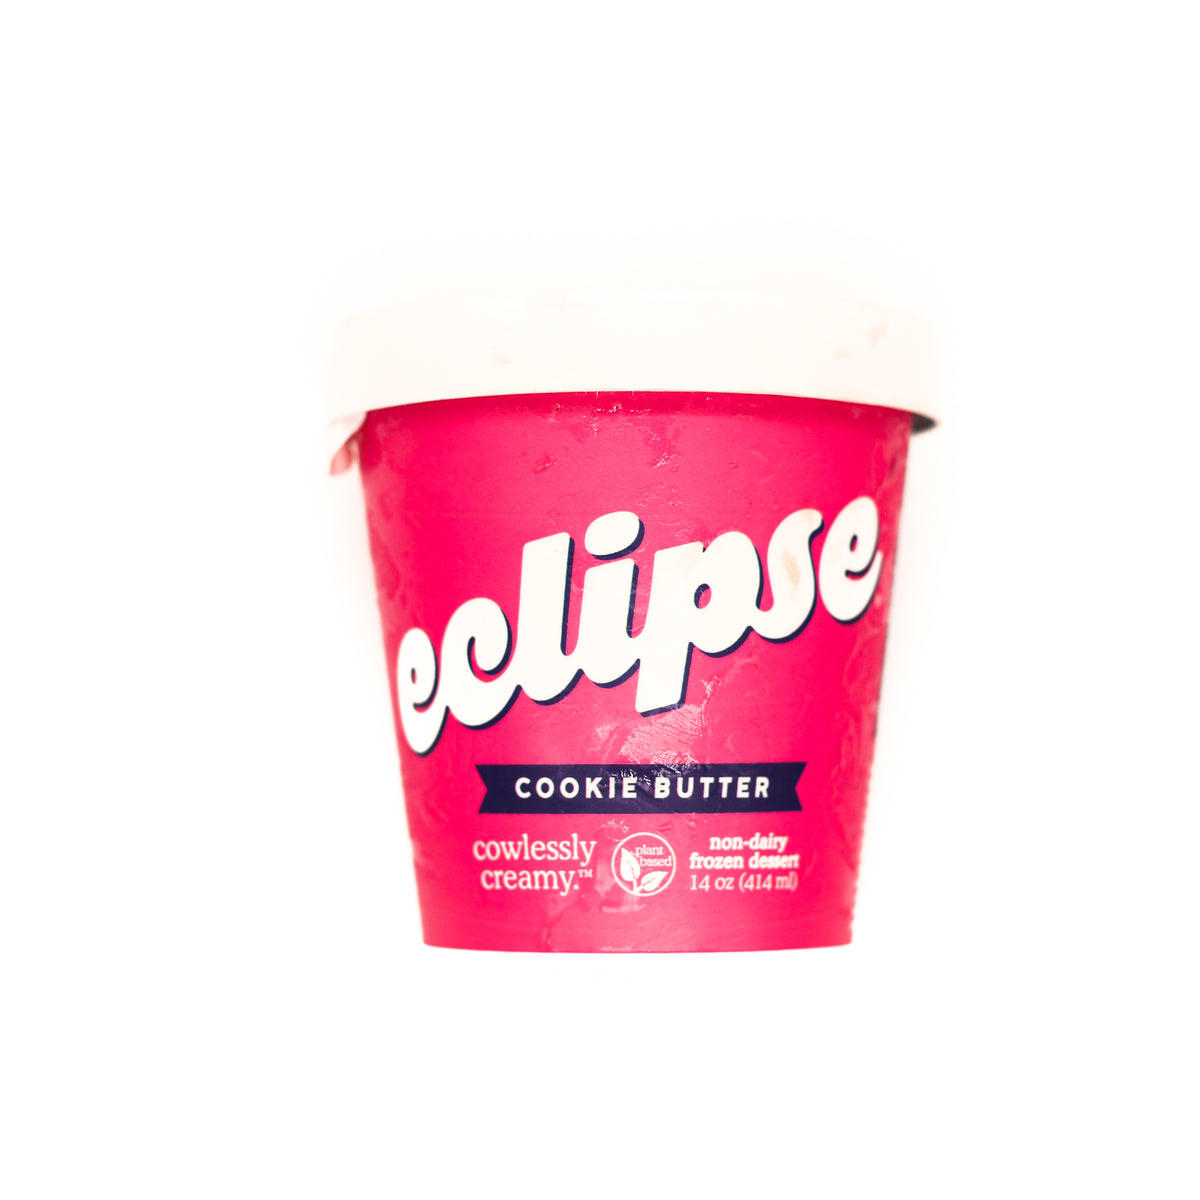 Eclipse Ice Cream Cookie Butter